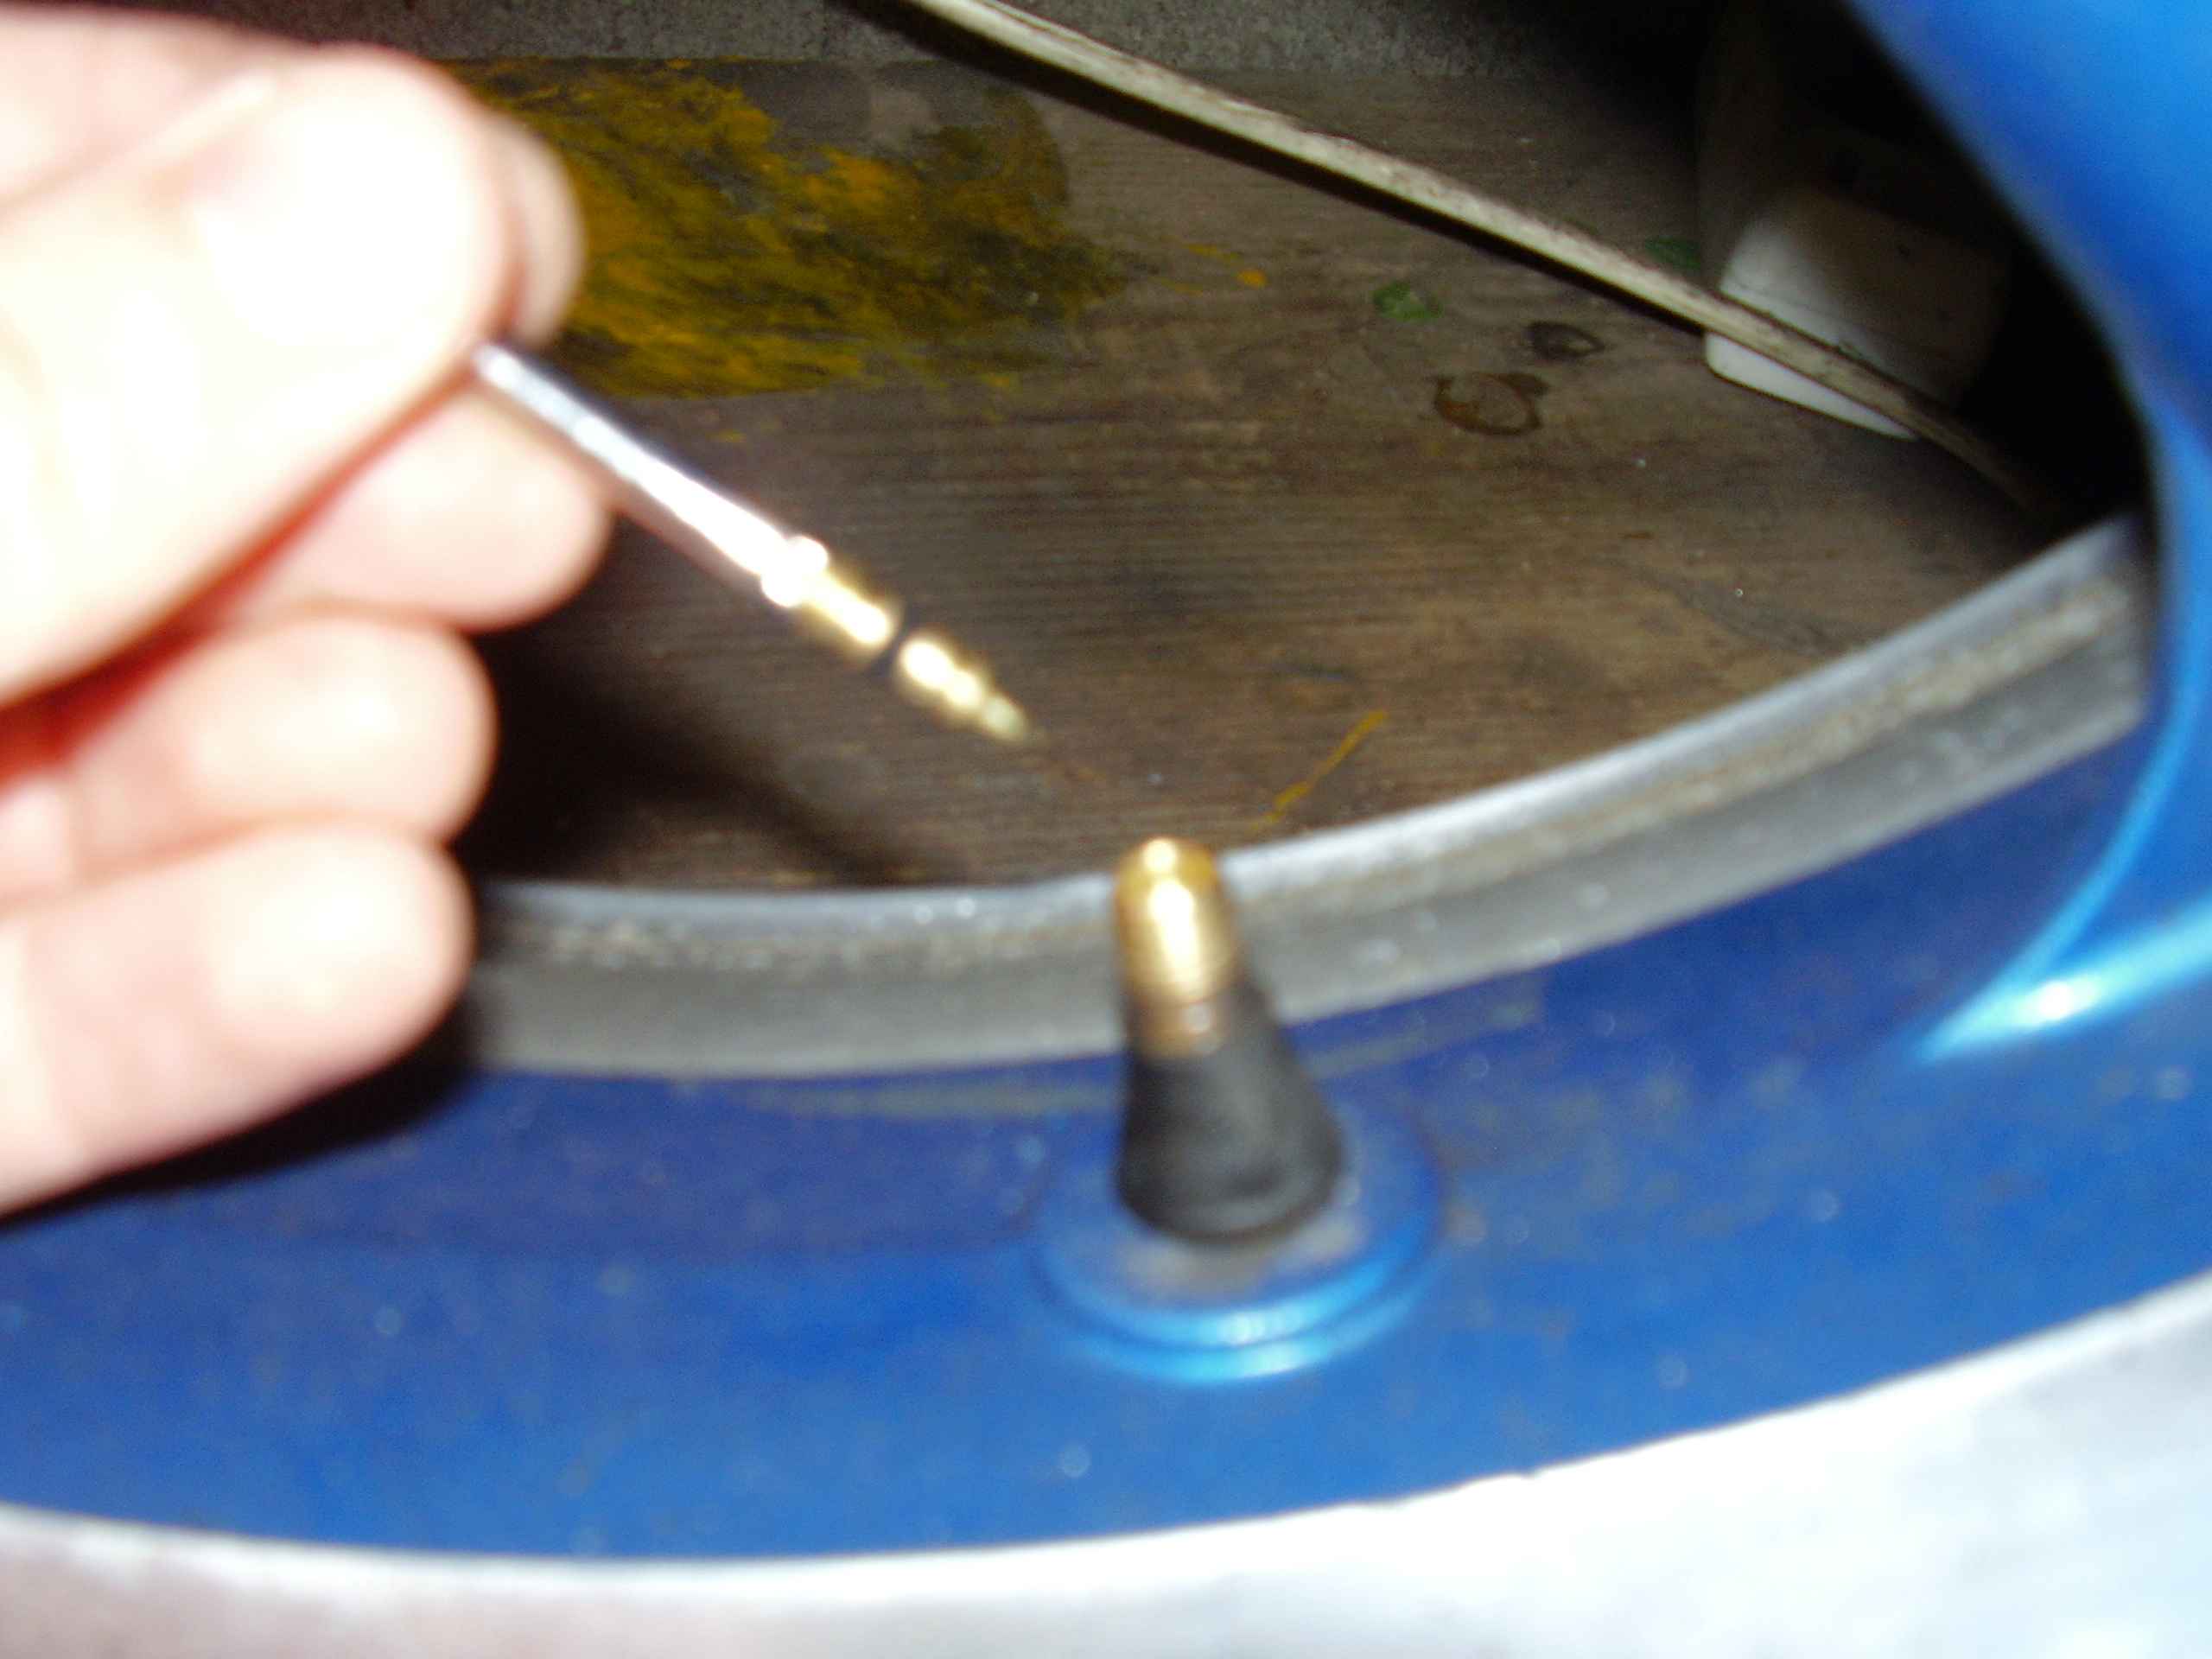 comment reparer valve pneu